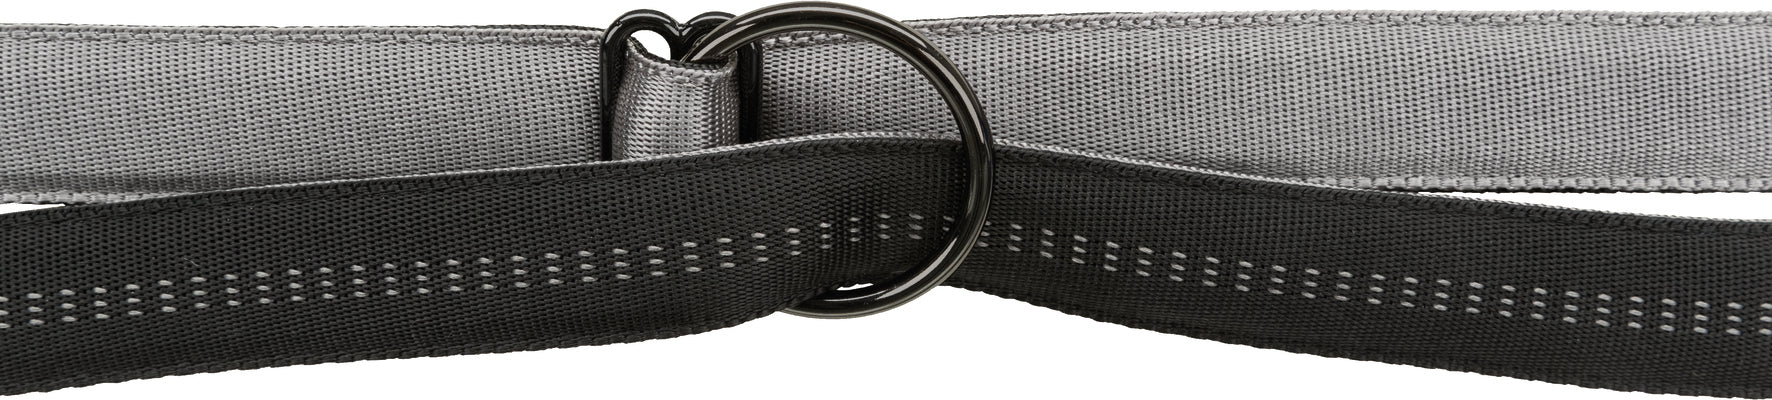 Trixie Softline Elegance Adjustable Leash - Black/Graphite